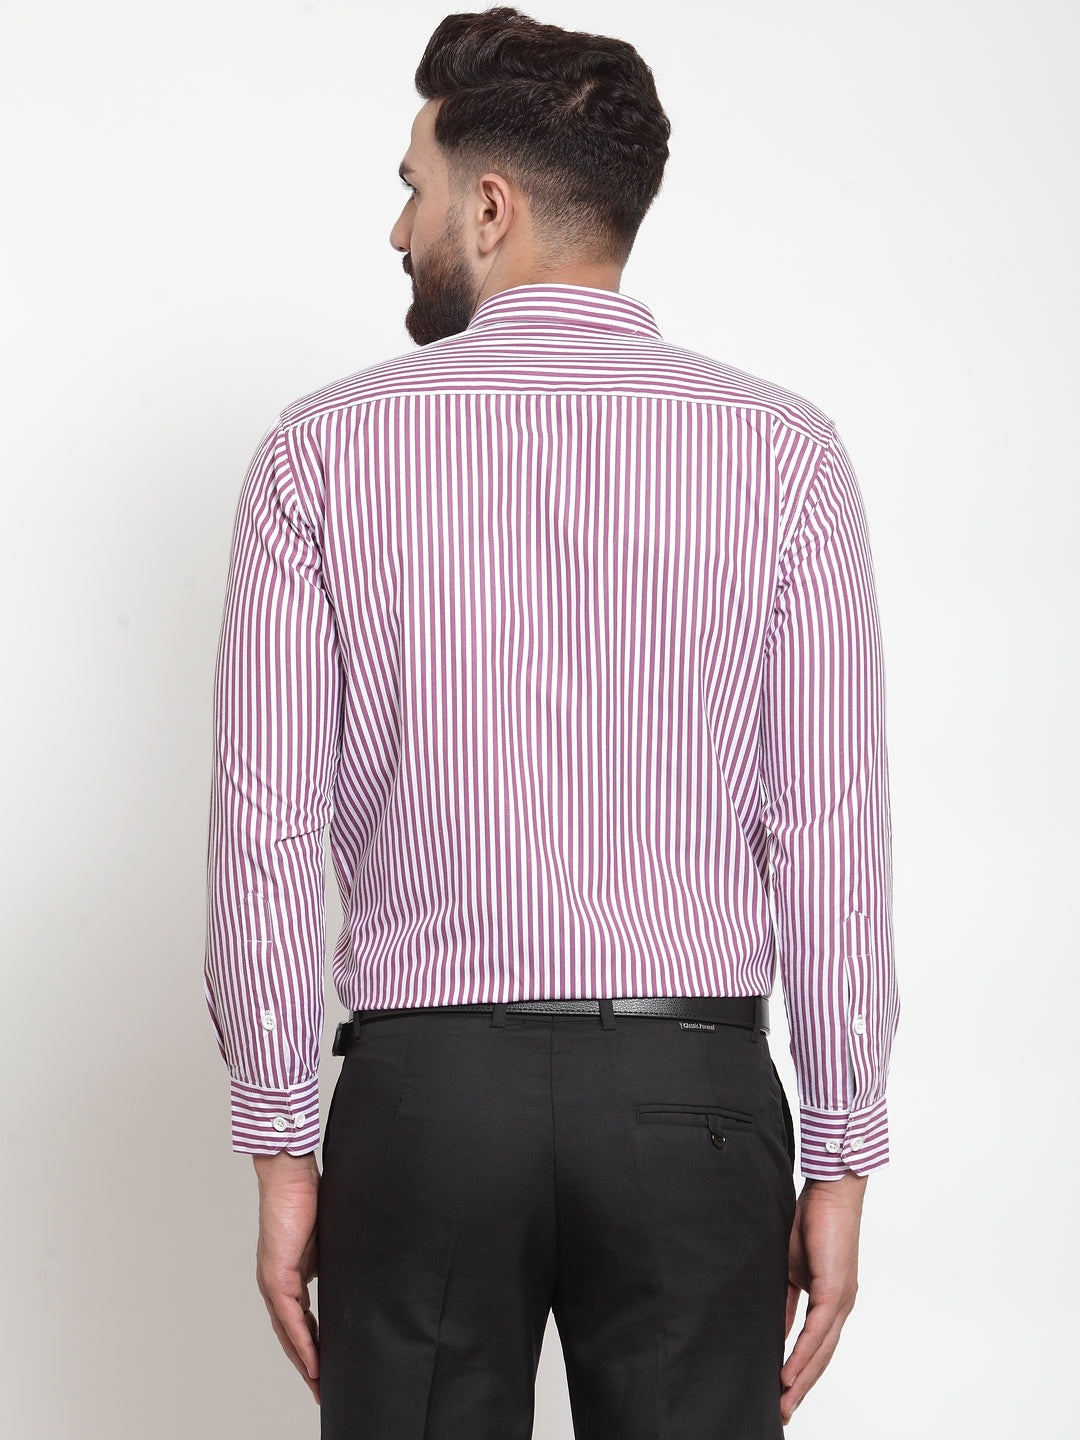 Men's Purple Cotton Striped Formal Shirts ( SF 735Purple ) - Jainish